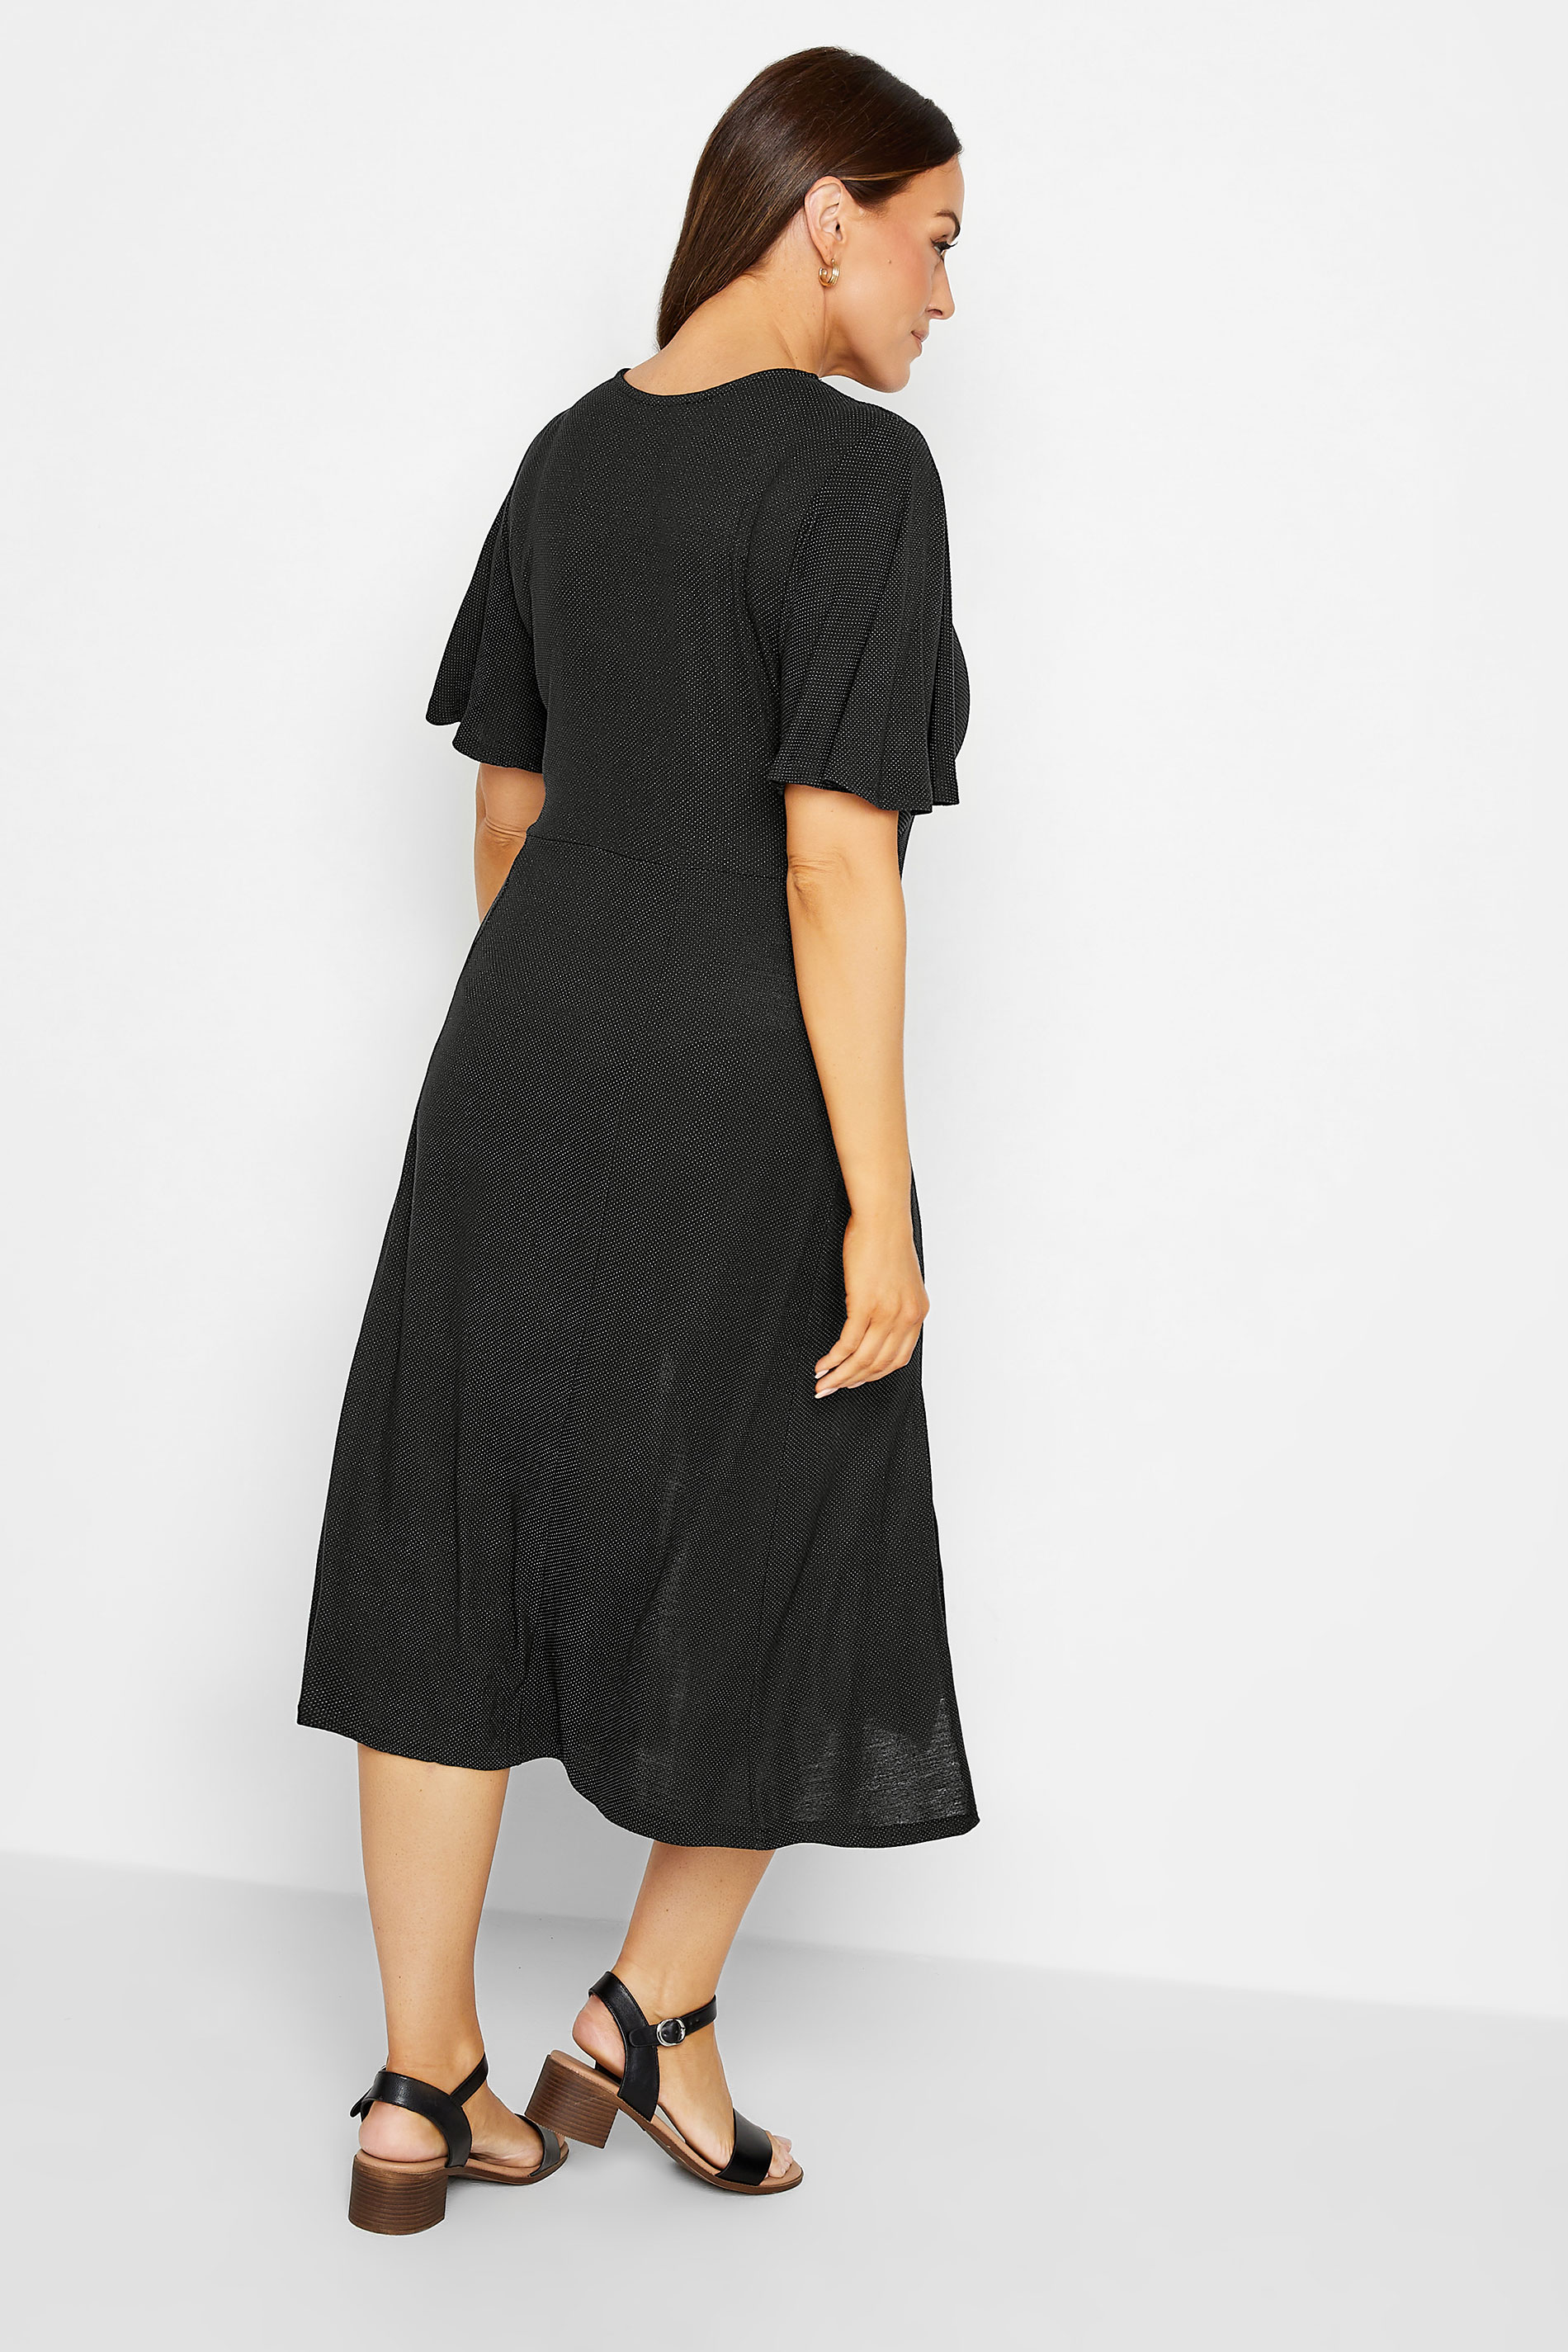 M&Co Black Angel Sleeve Split Hem Midi Dress | M&Co 3